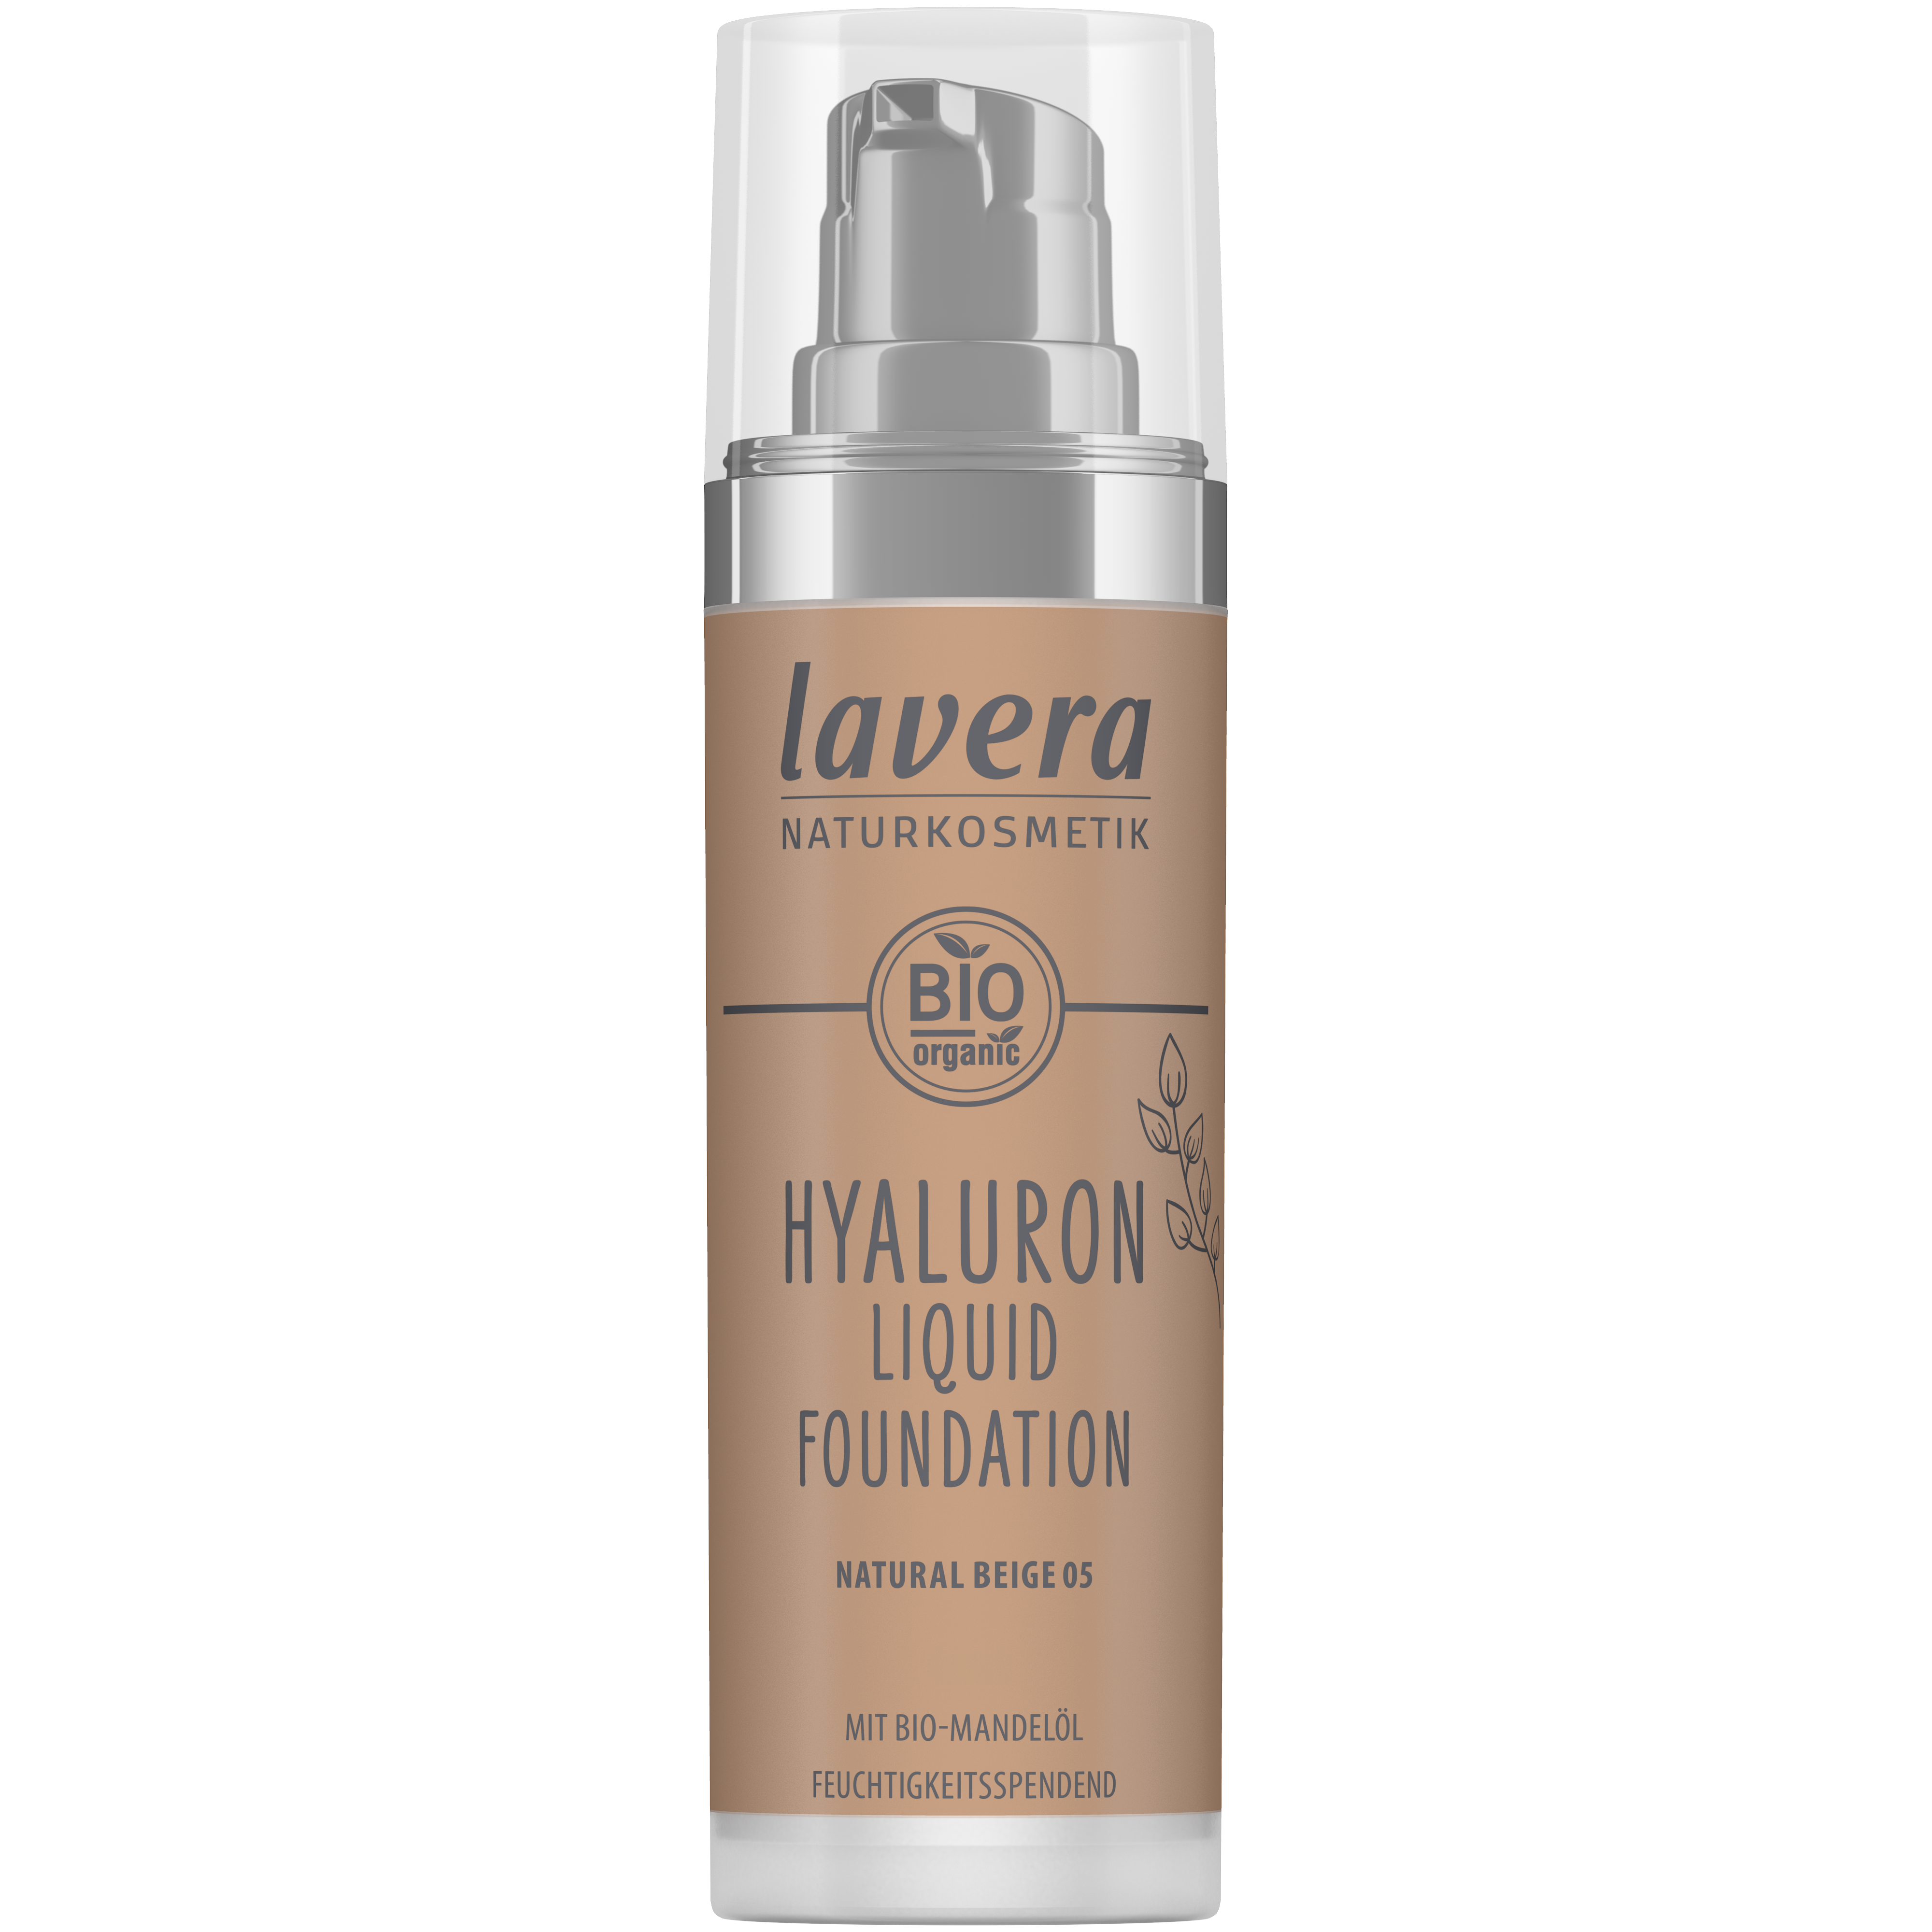 Lavera Hyaluron Liquid Foundation -Natural Beige 05